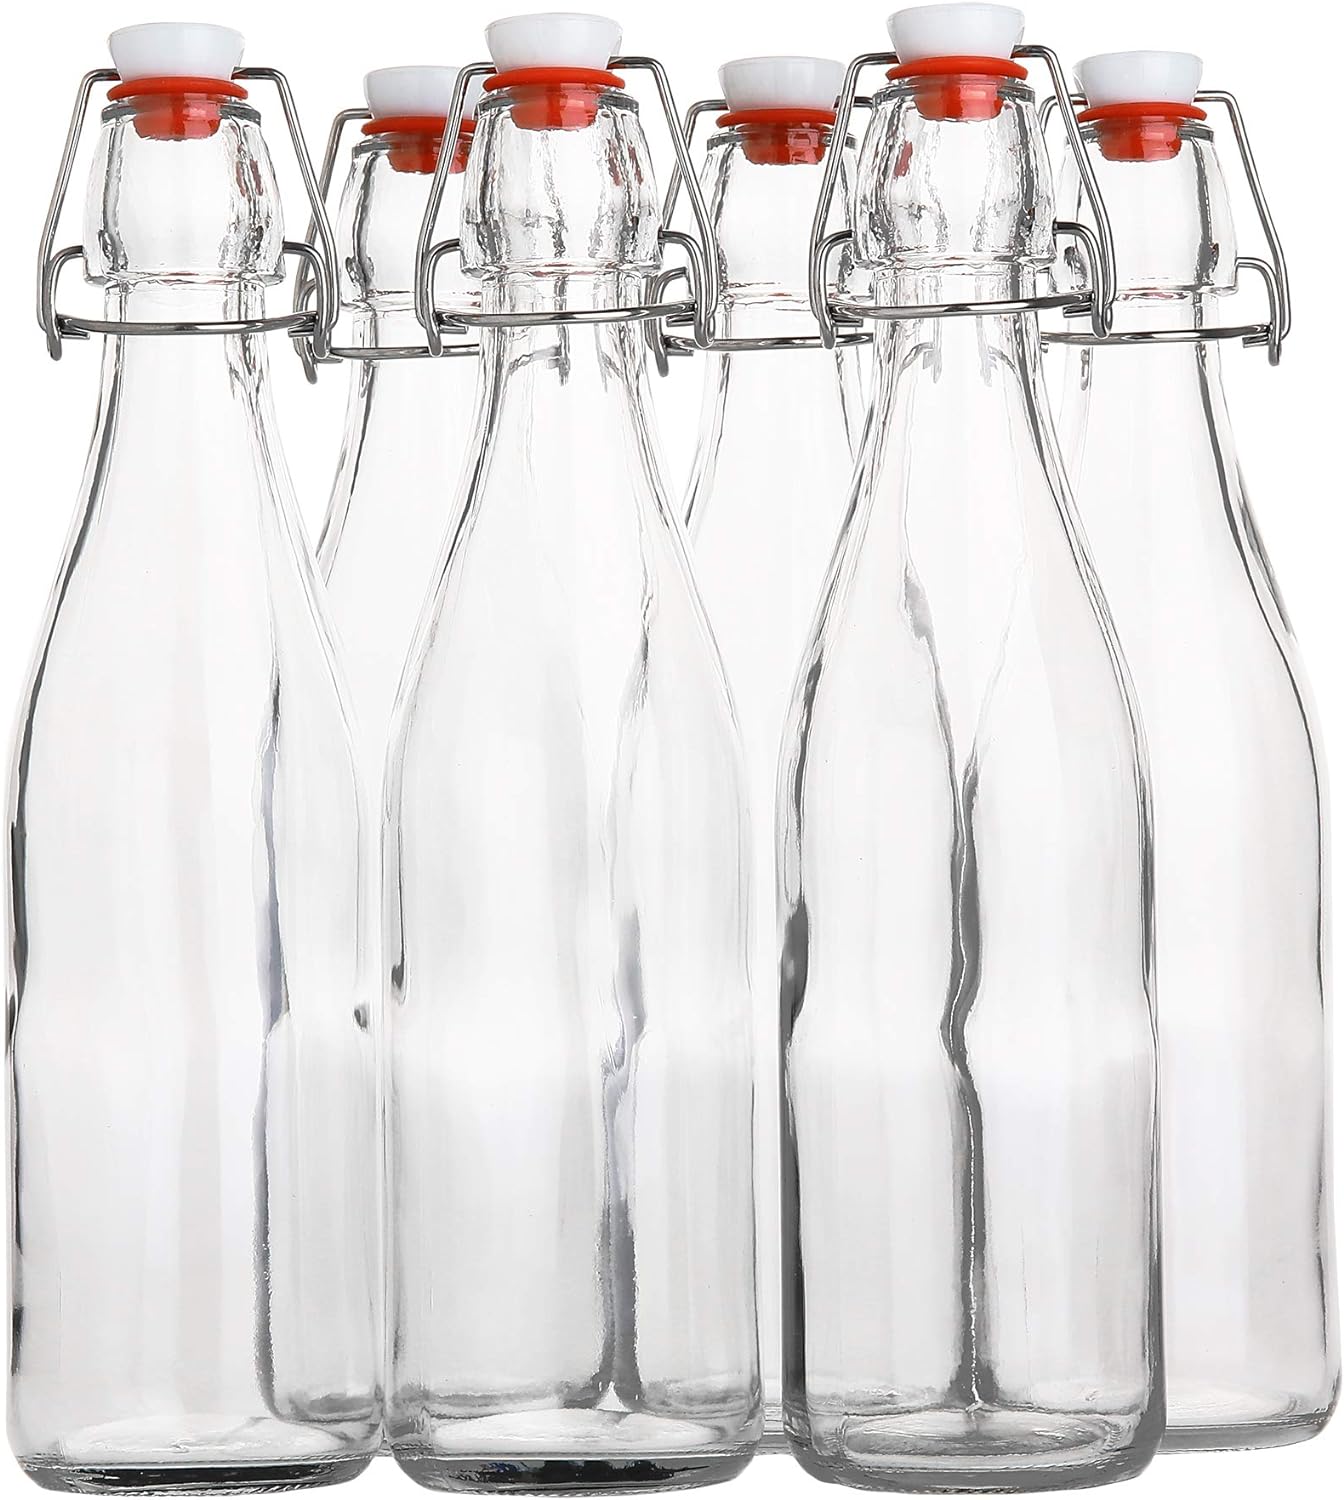 AYL Flip Top Glass Bottle [9 fl. oz.] [Pack of 8]-Glass Brewing Bottle-Swing Top Bottles for Carbonated Drinks,Kombucha,Kefir, Soda, Juice, Fermentation, Salad Dressing, Coquito, Syrup & Home Brewing